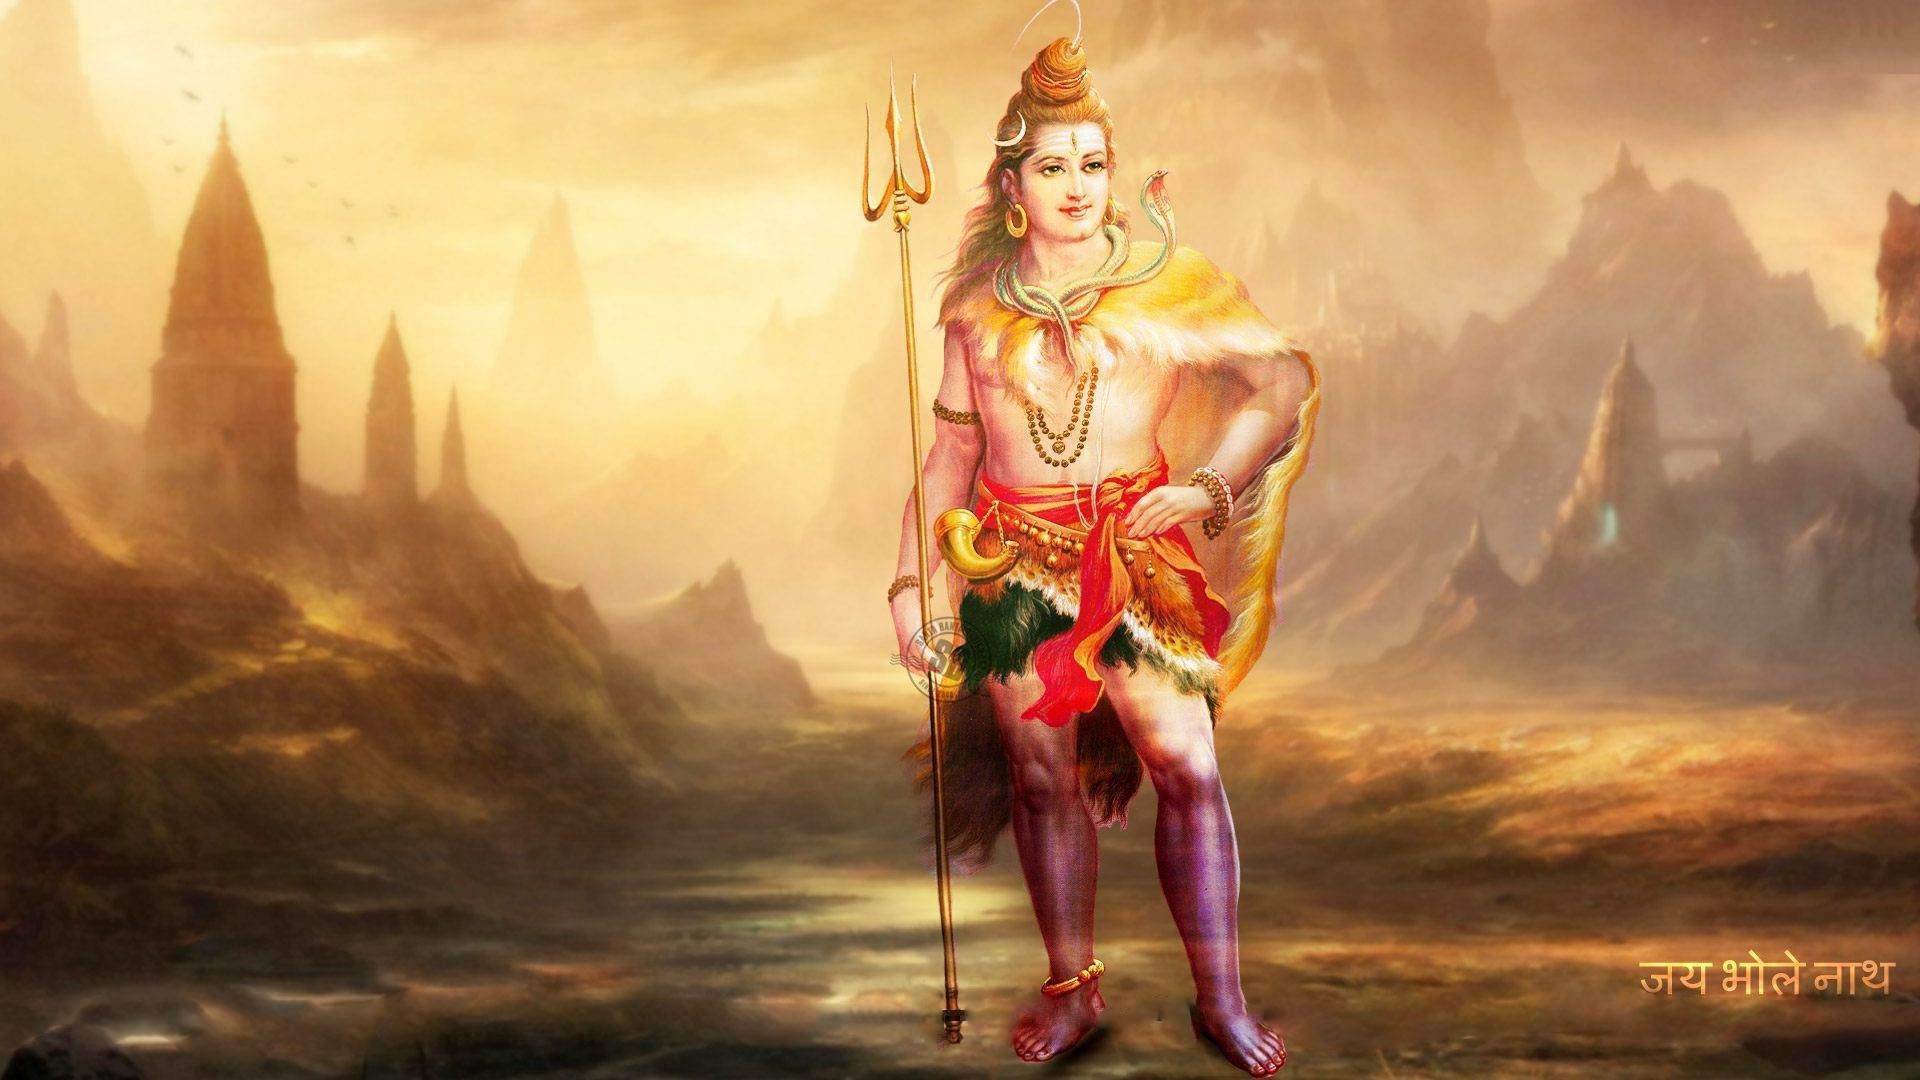 Lord Shiva Hd Wallpapers 1080p | Hindu Gods and Goddesses